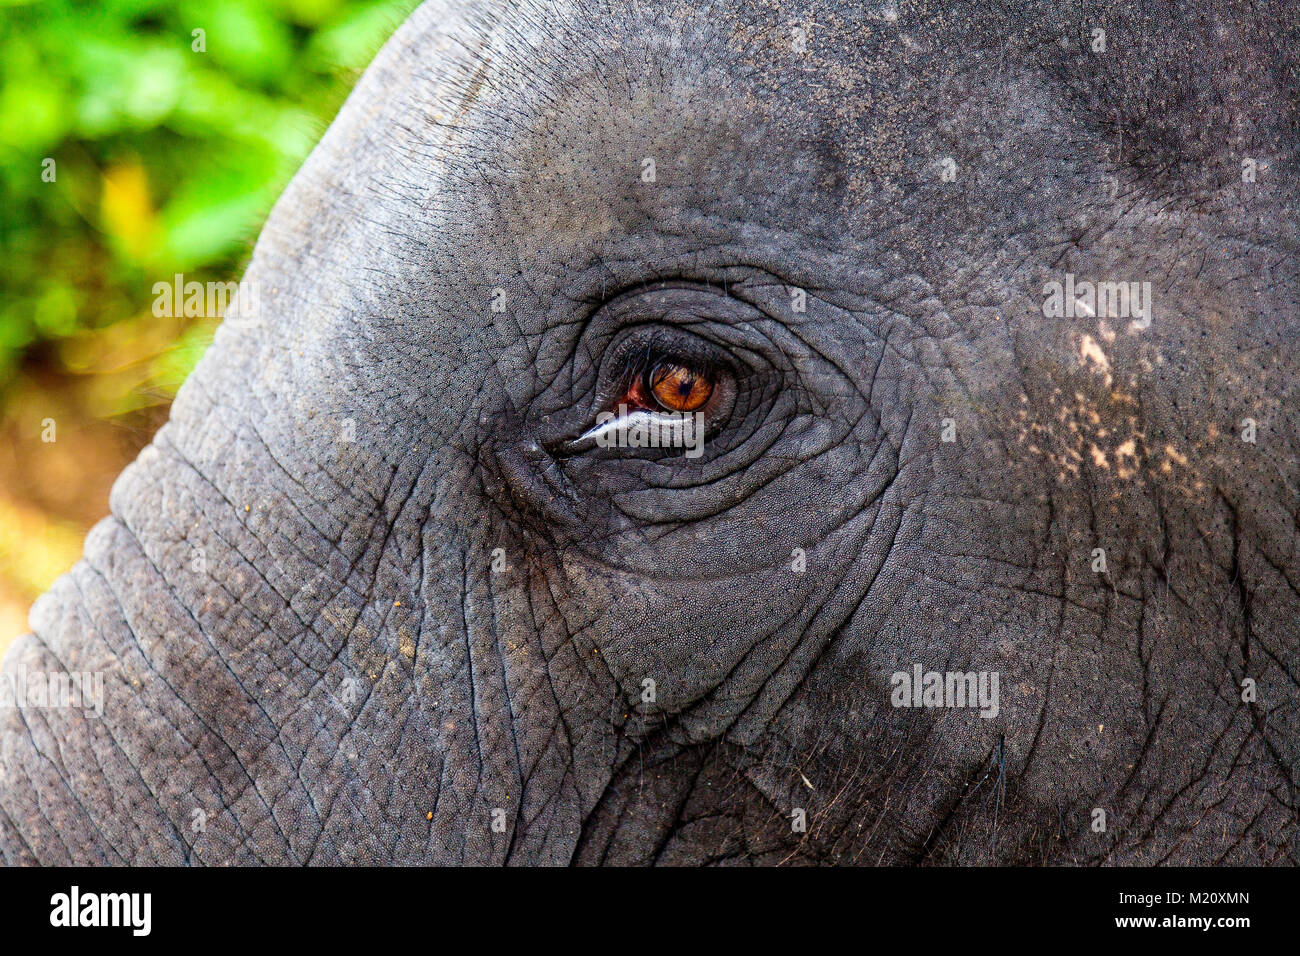 The eye of an elephant. Location; close to Periyar River, near Kodanad village in Kerala, India. Stock Photo